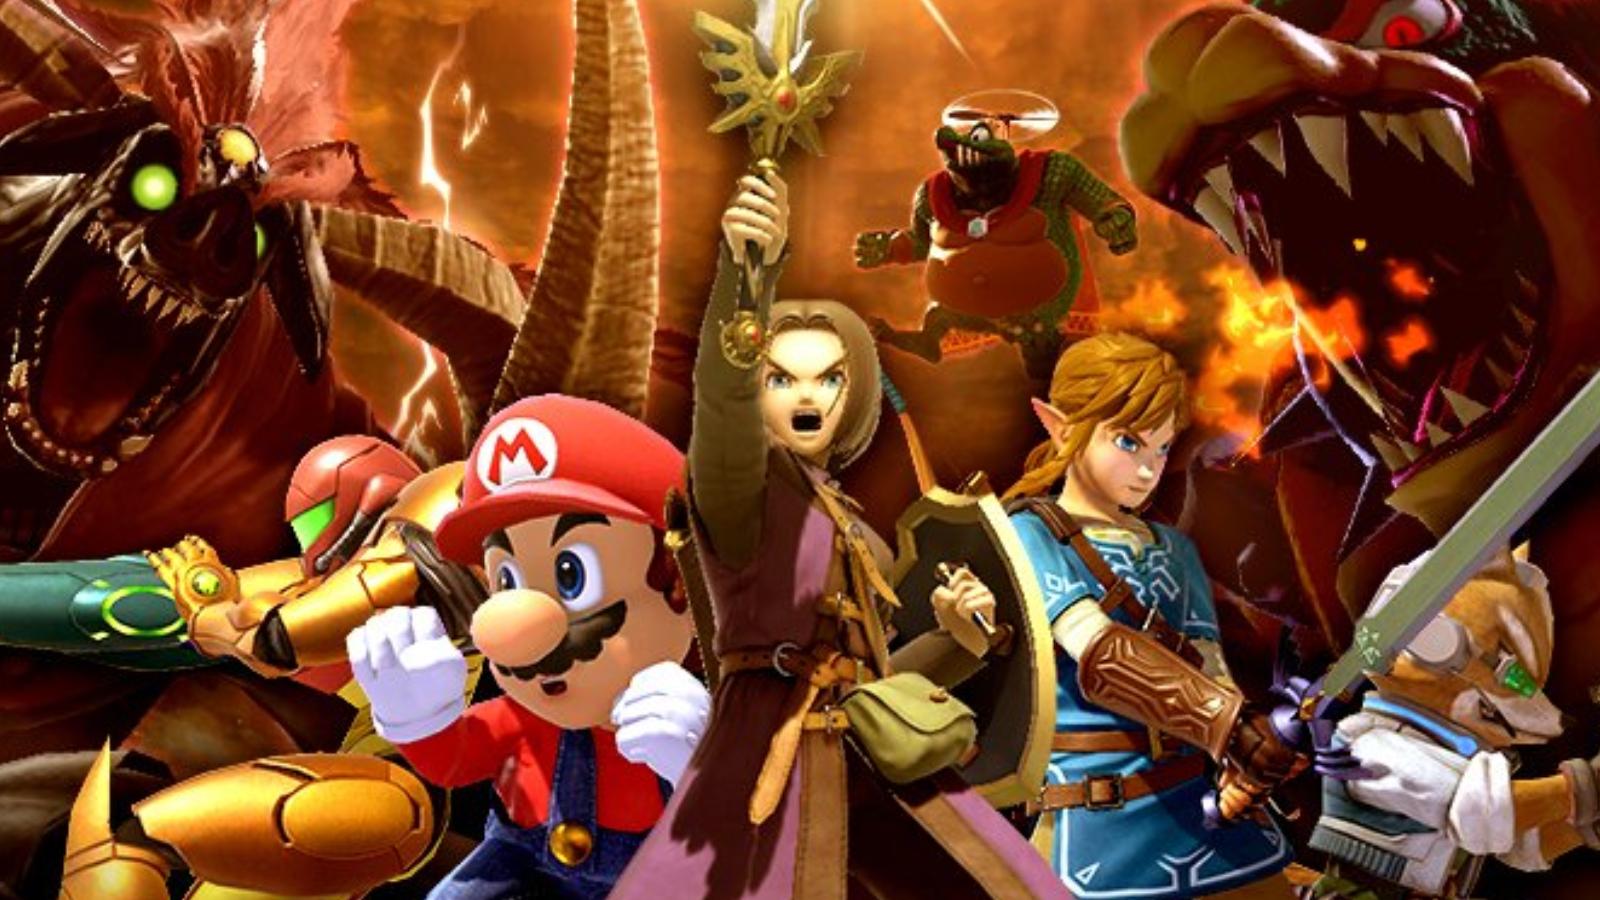 Best Super Smash Bros games: Pro players' top picks